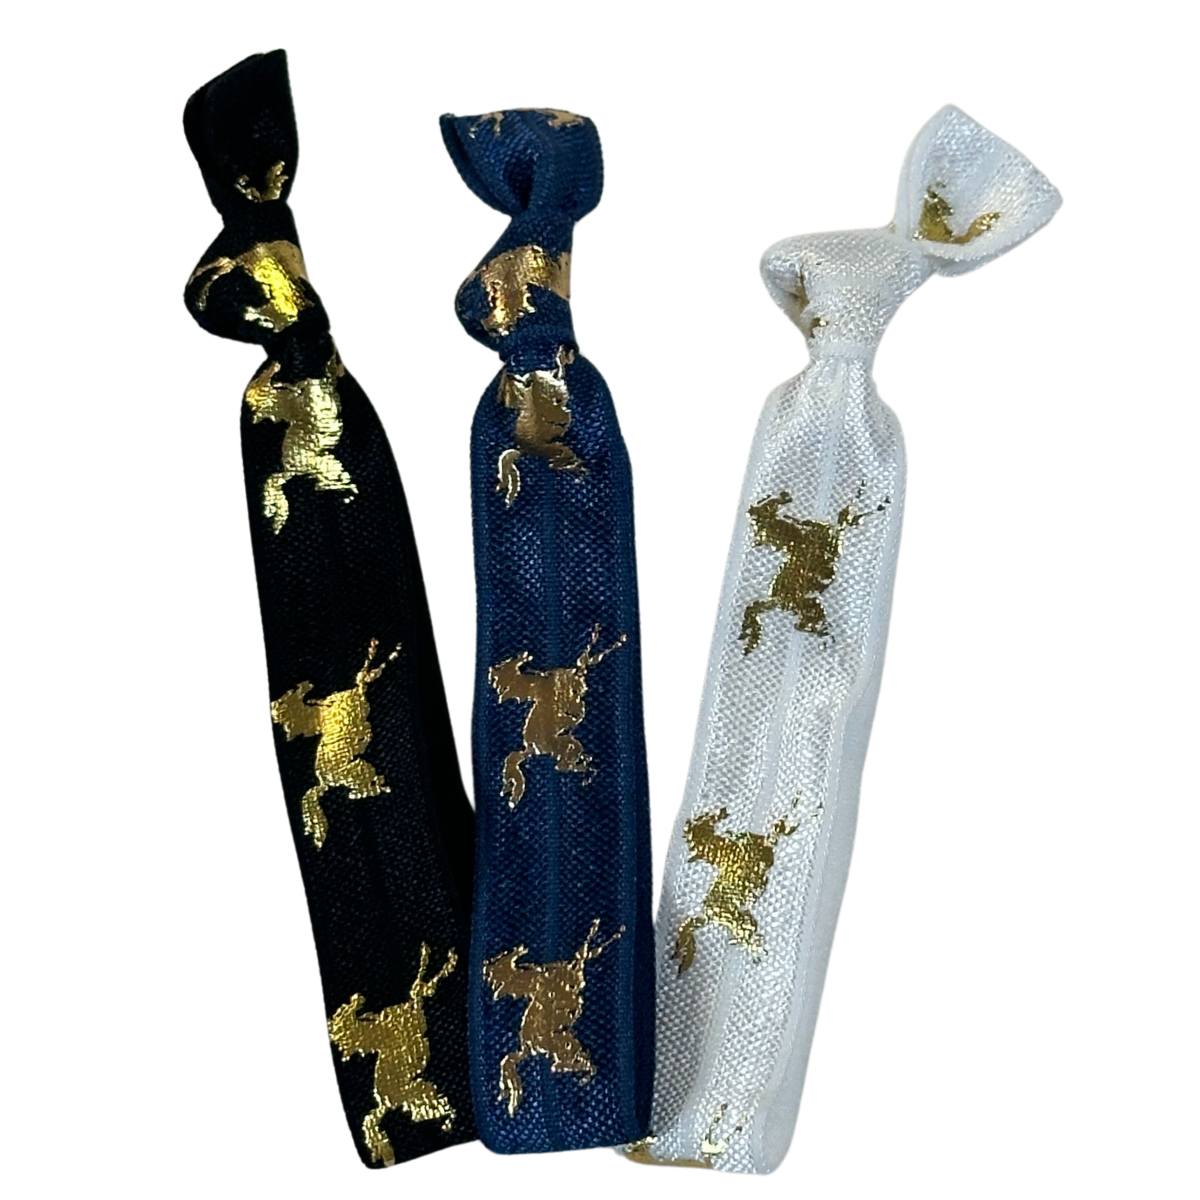 Gold Foil Horse Print Hair Ties in Navy/White/Black - 3pc.